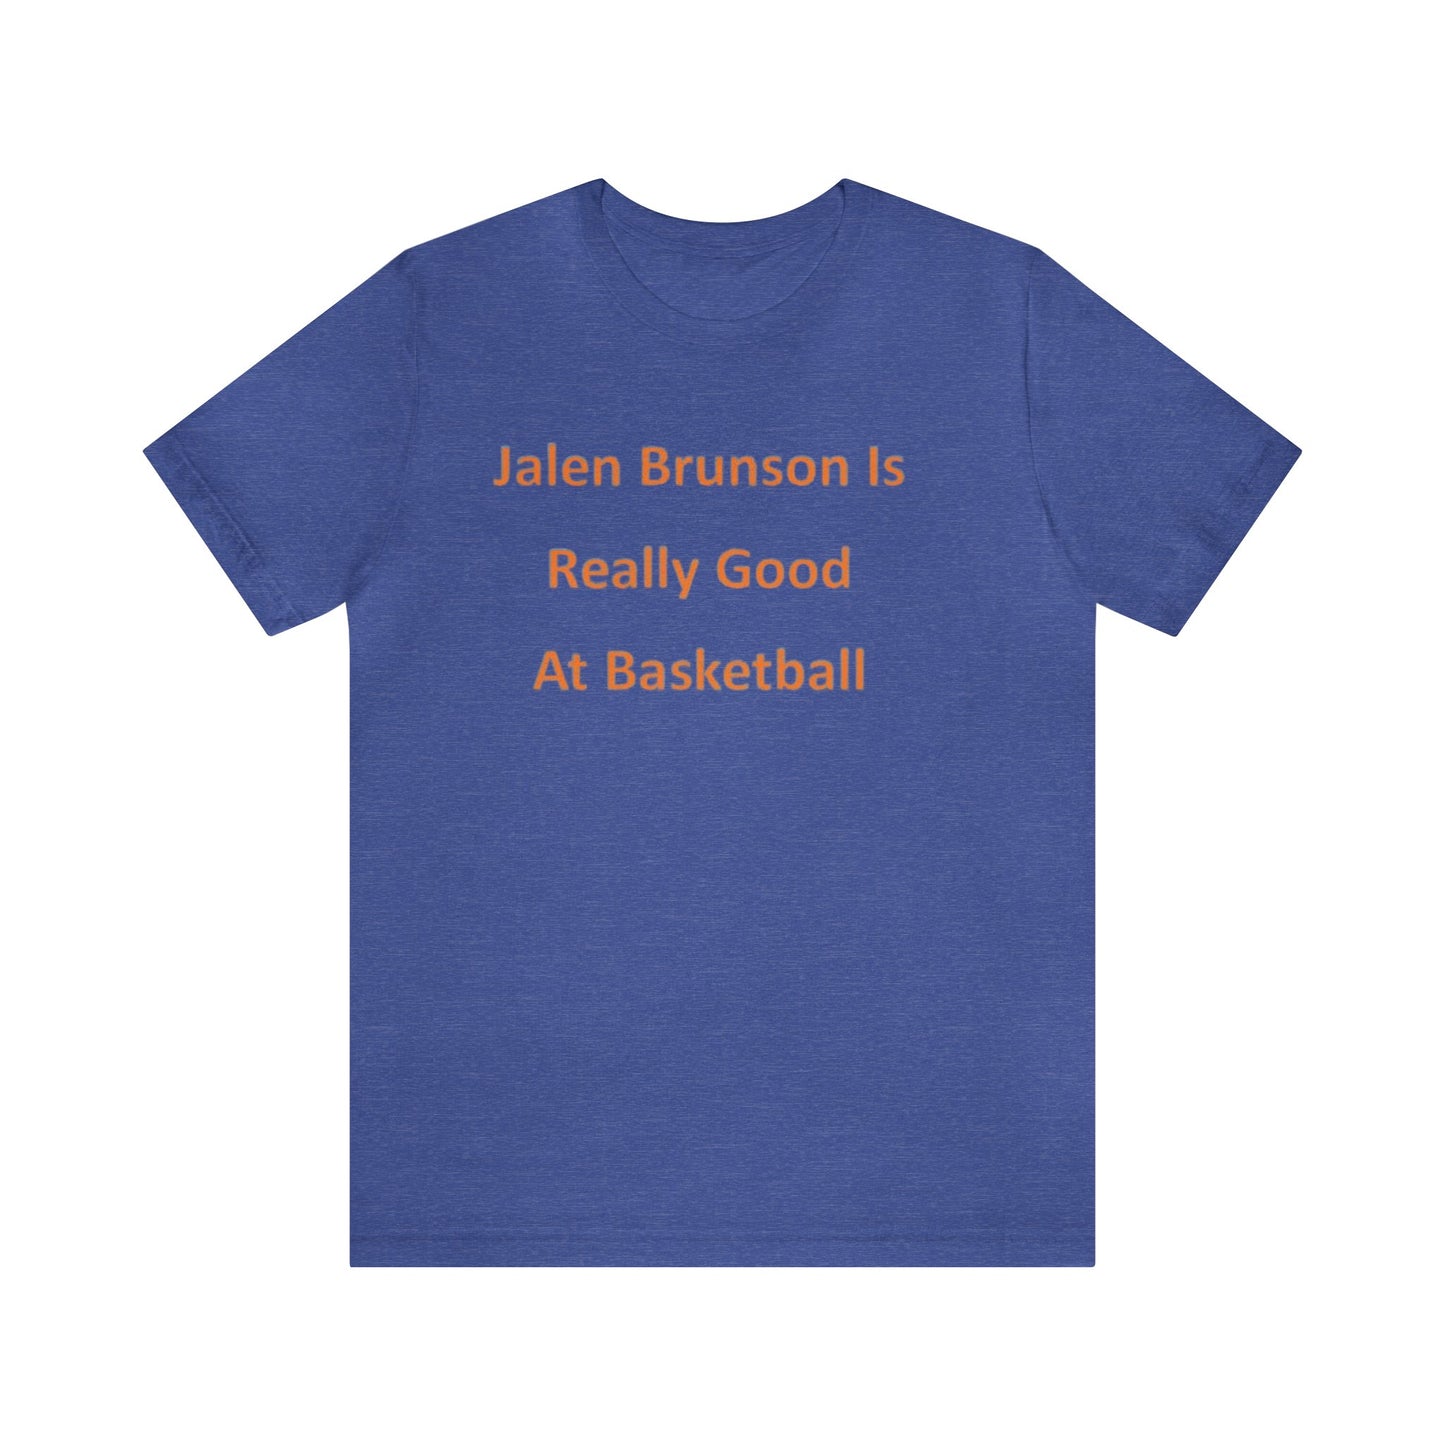 Jalen Brunson Is Really Good At Basketball Tee